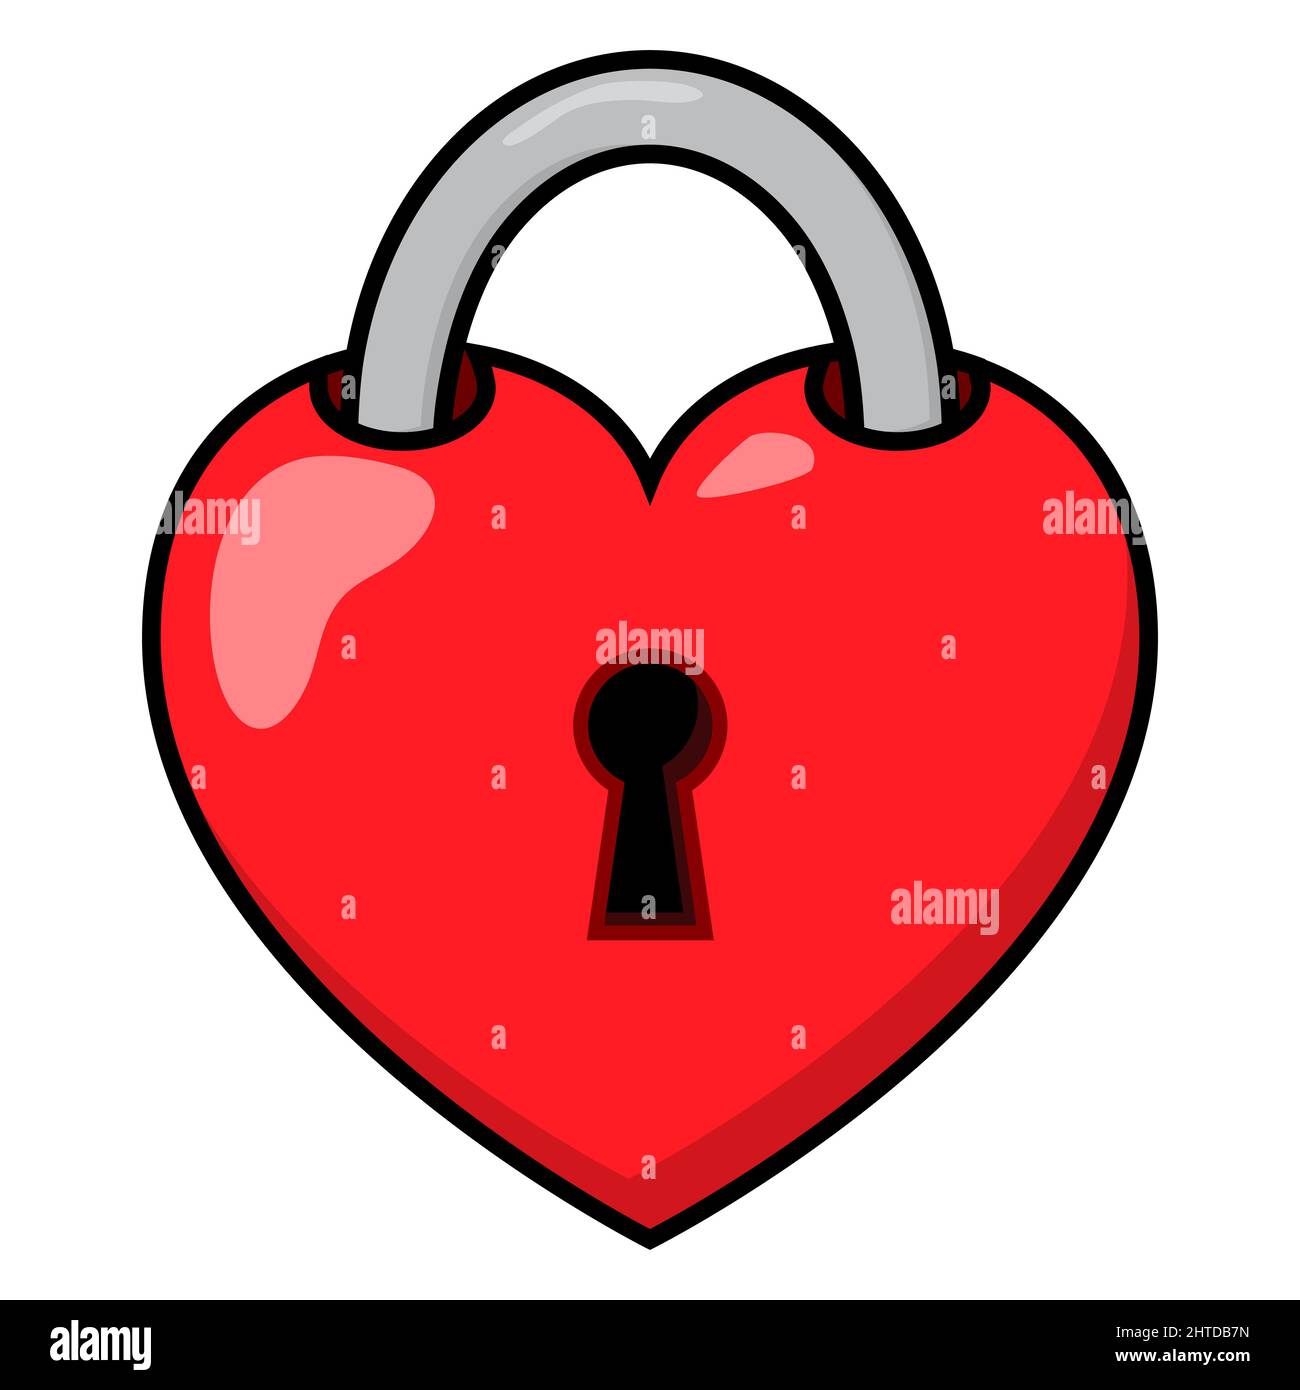 Heart shape lock icon. vector cartoon illustration isolated on white background Stock Vector